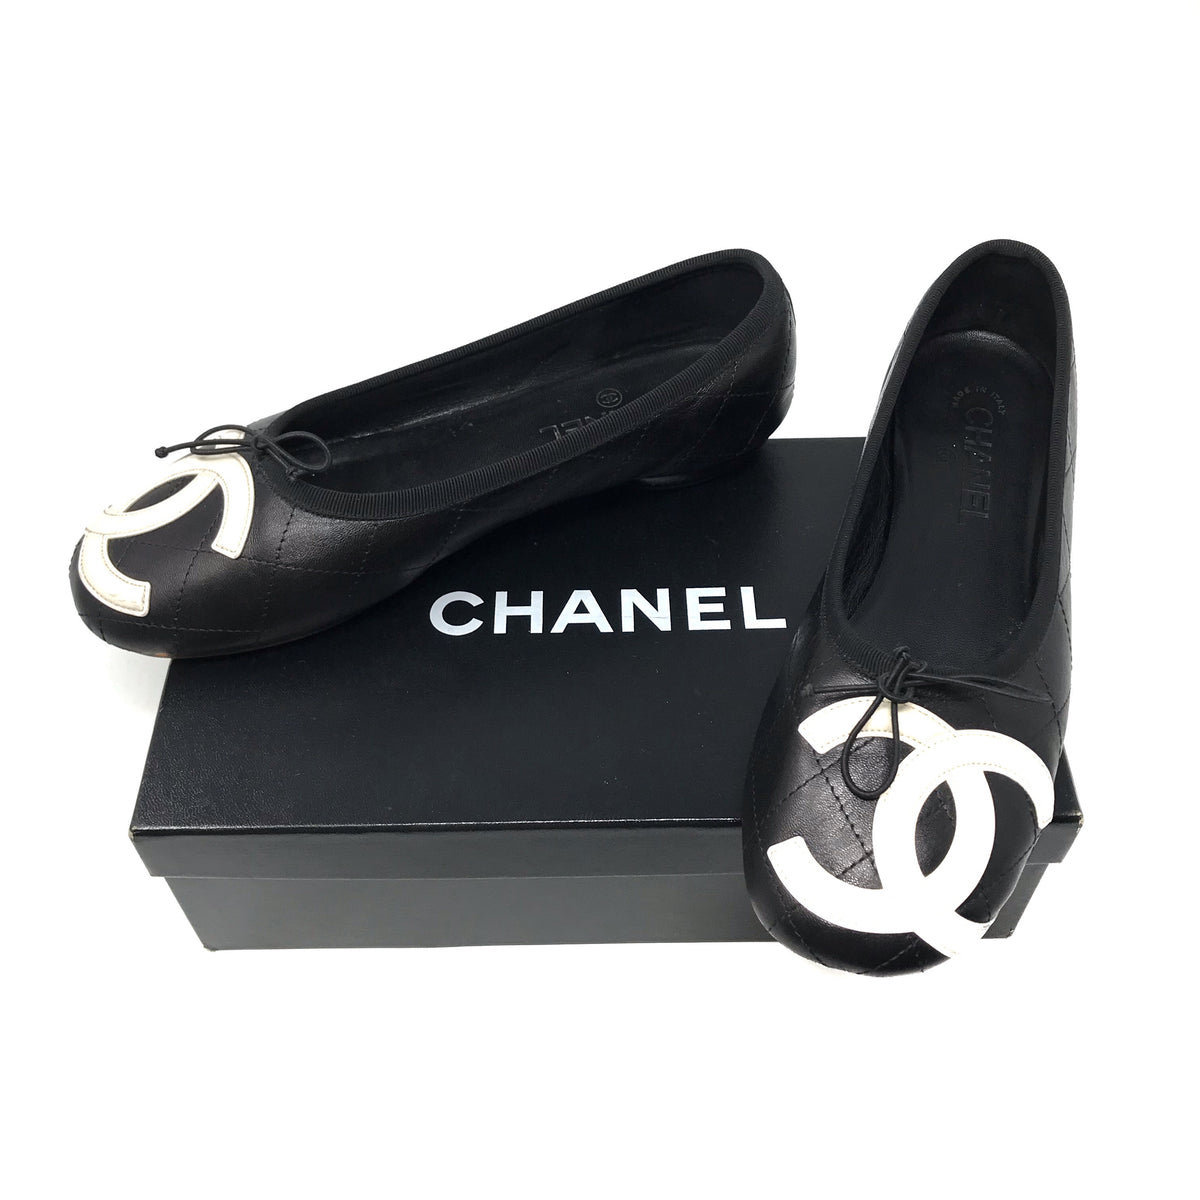 Chanel ballet flat shoes - Gem